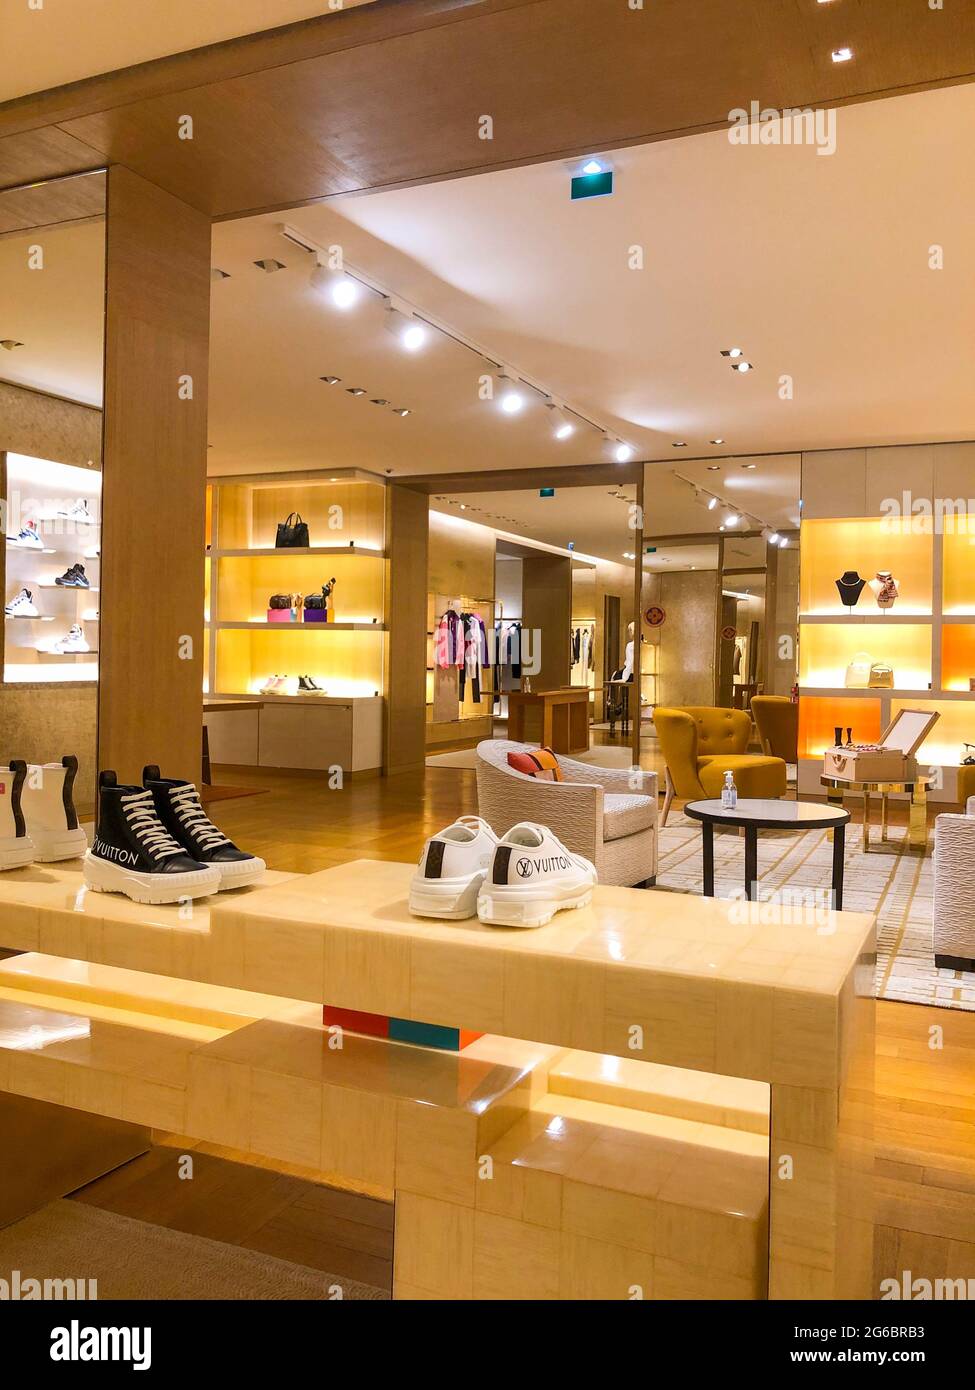 LVMH Is Opening a Restaurant Inside a Louis Vuitton Store